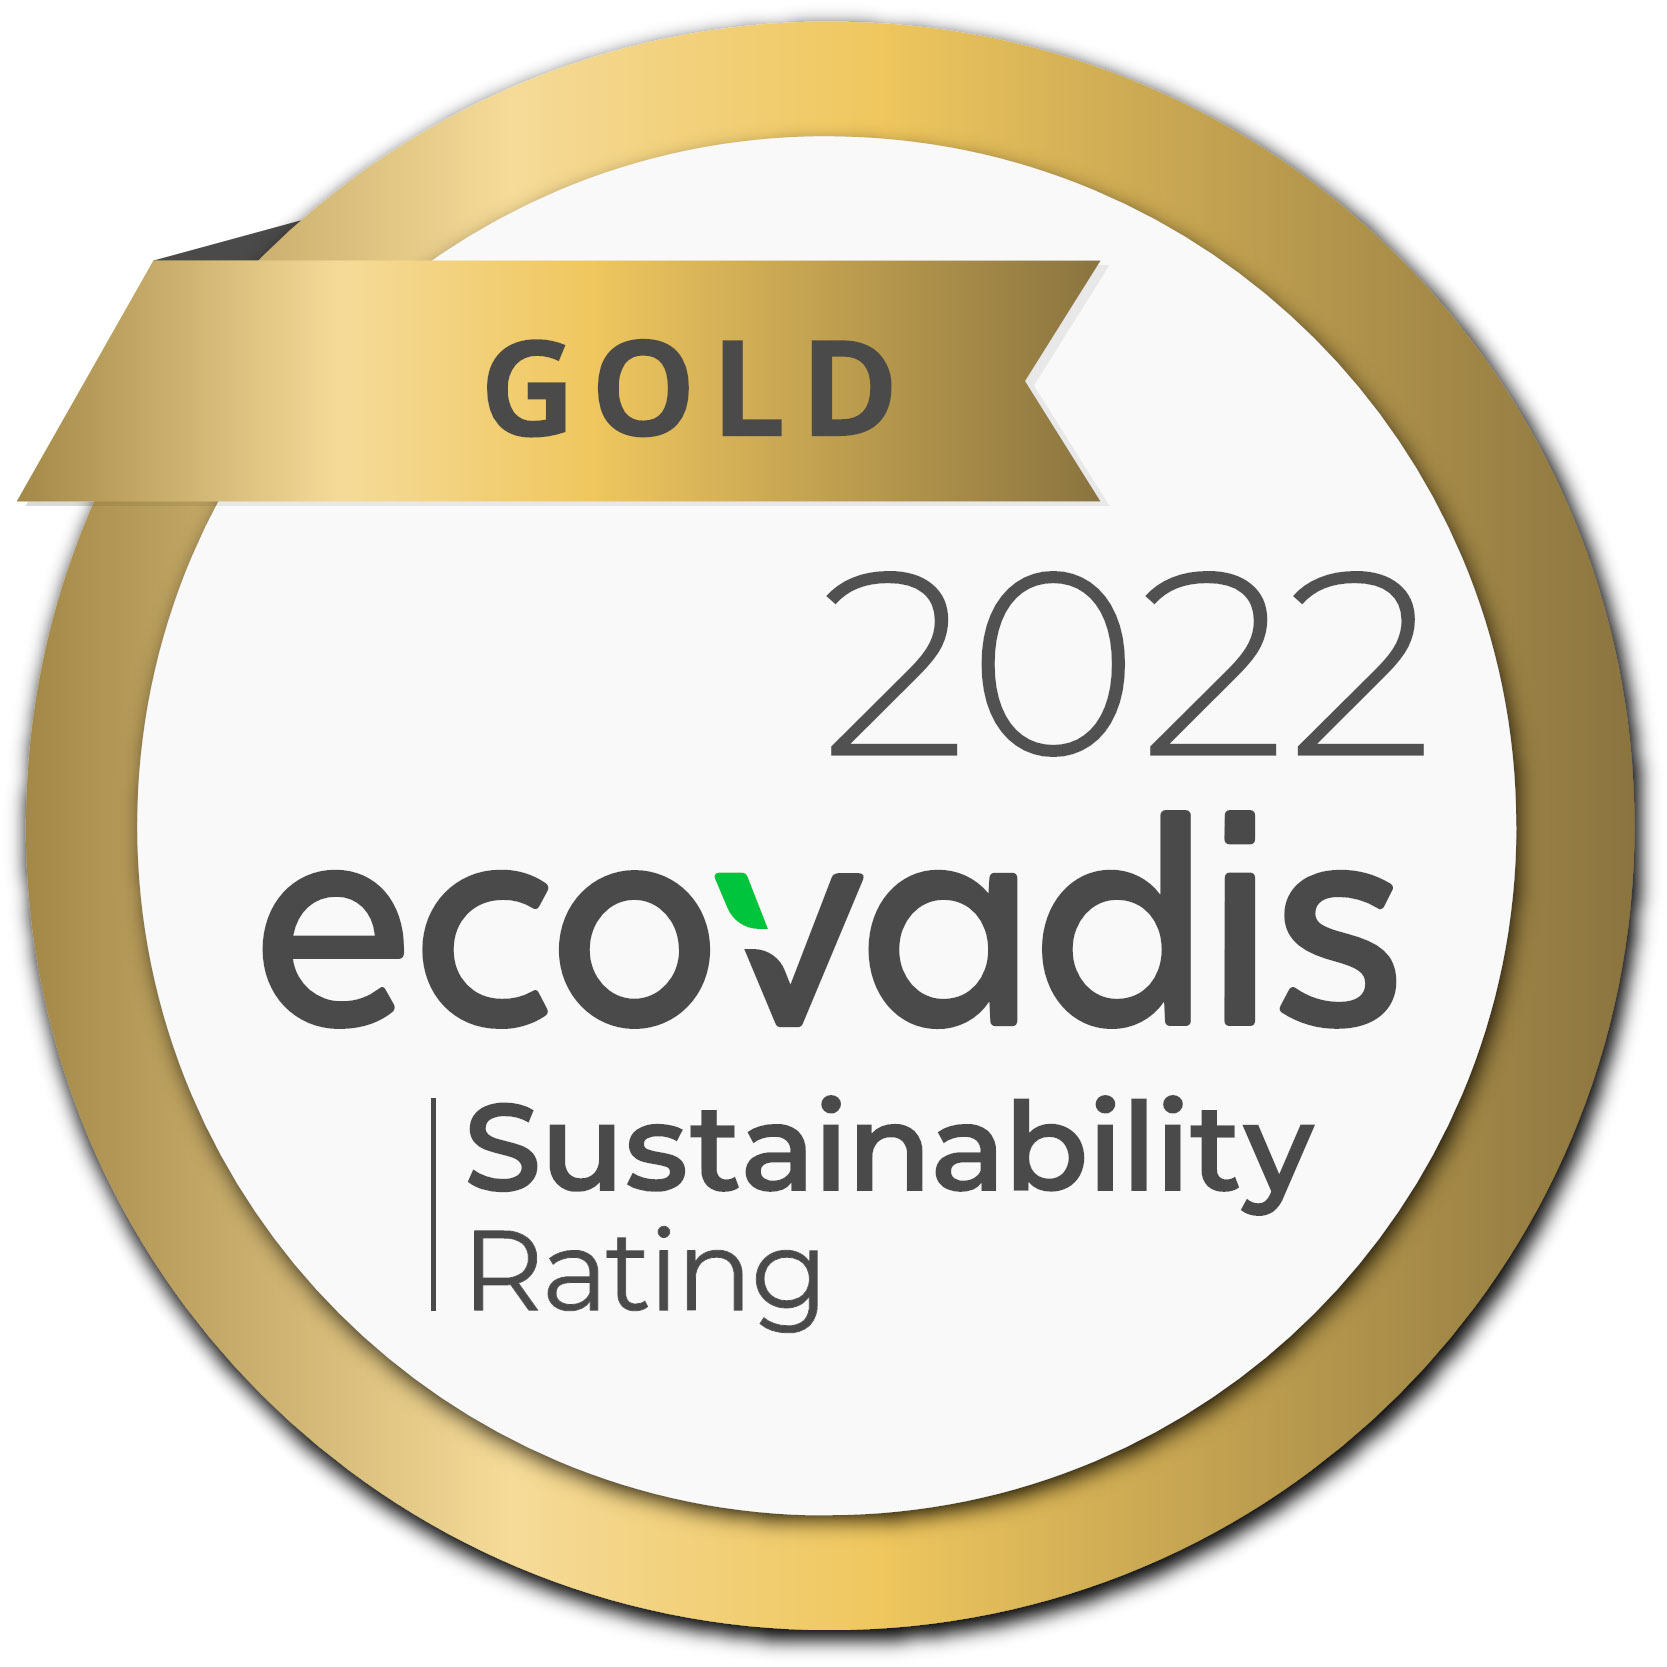 Ecovadis award